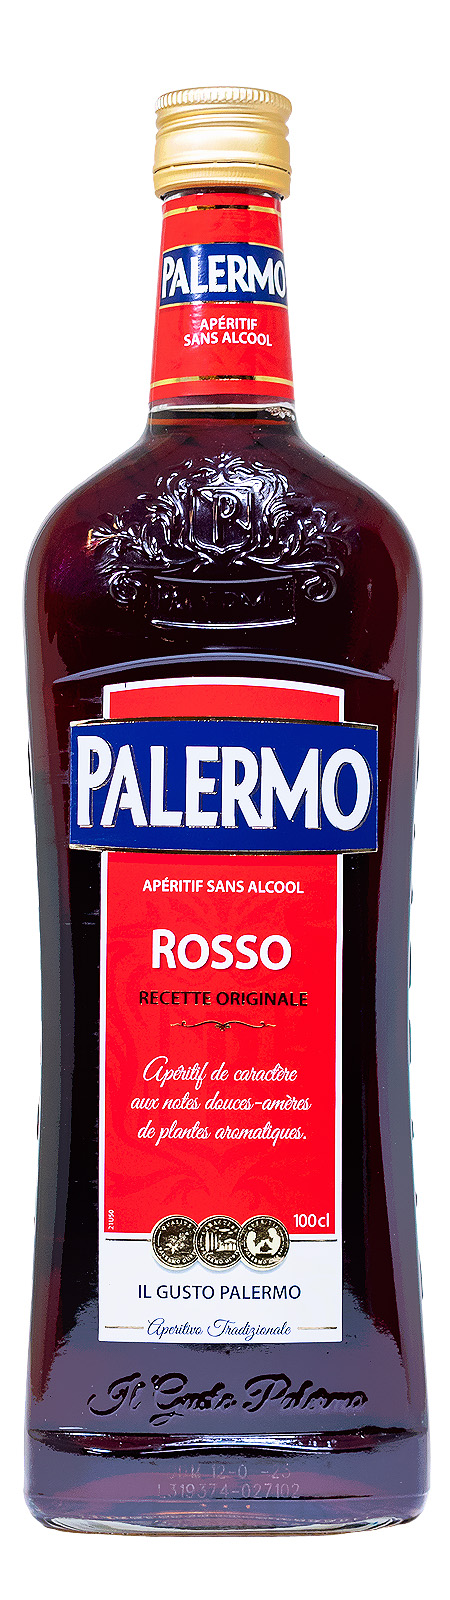 Palermo Rosso Aperitif ohne Alkohol - 1 Liter